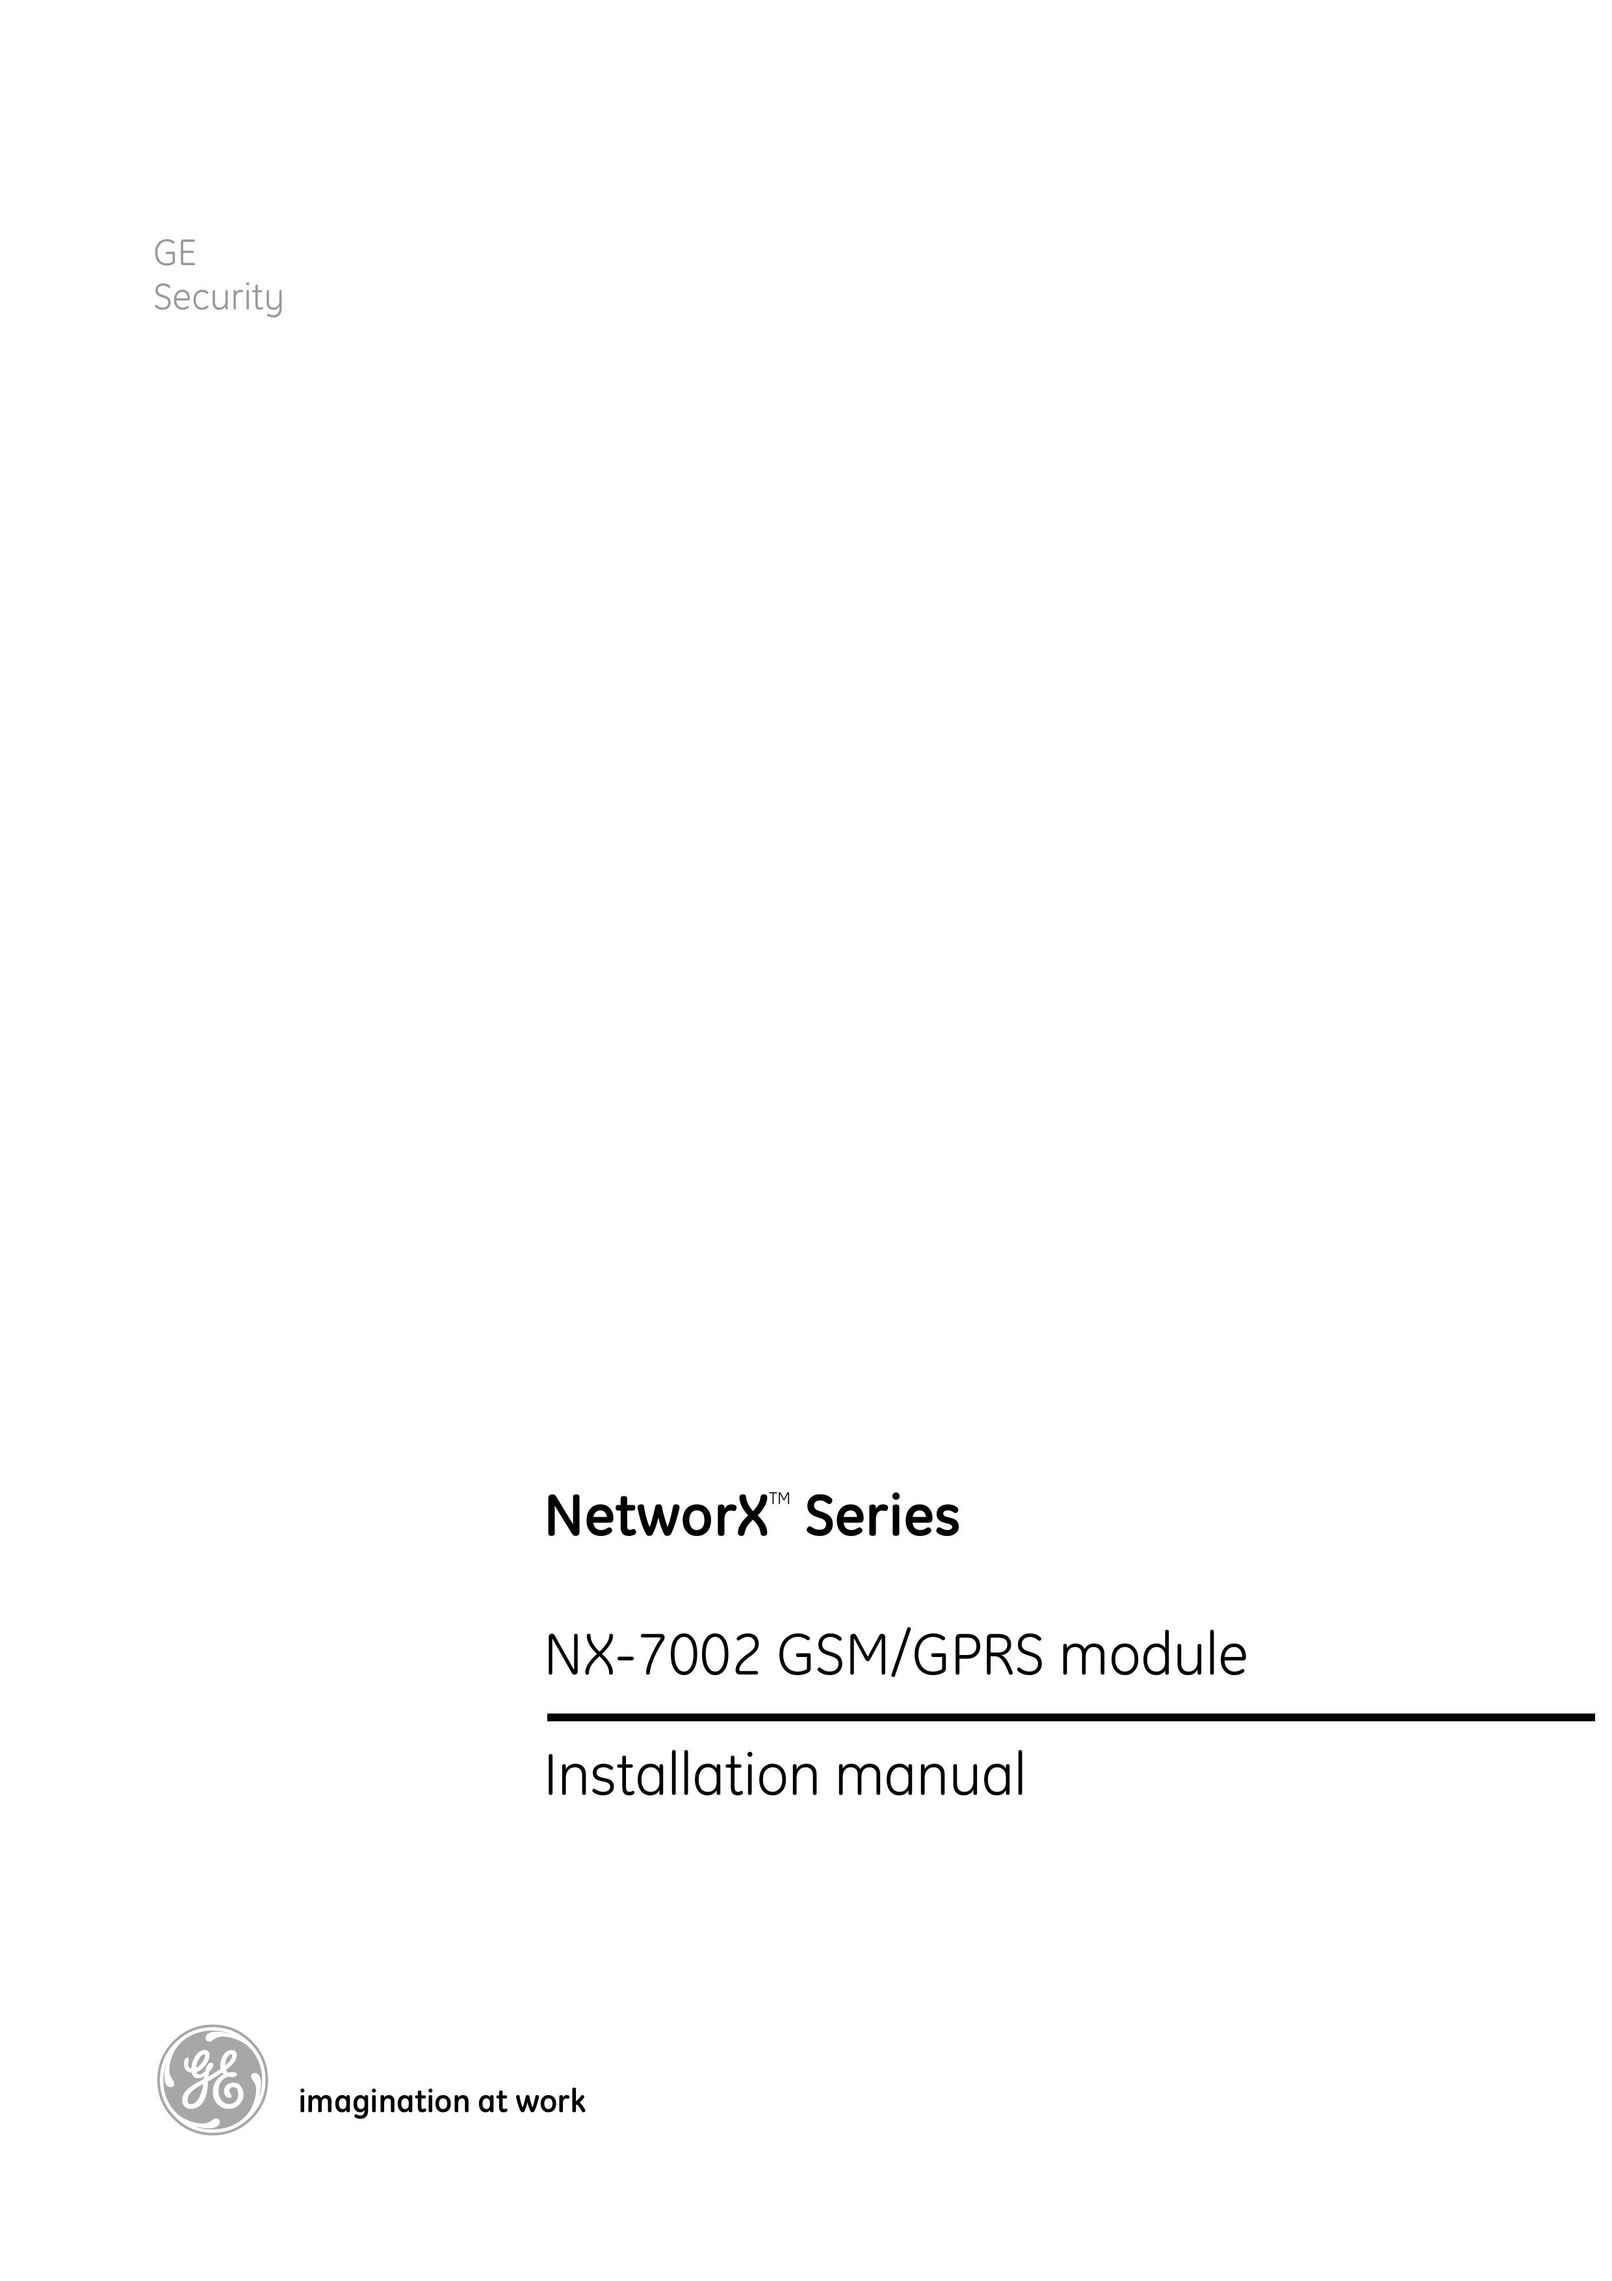 GE NX-7002 Cell Phone User Manual